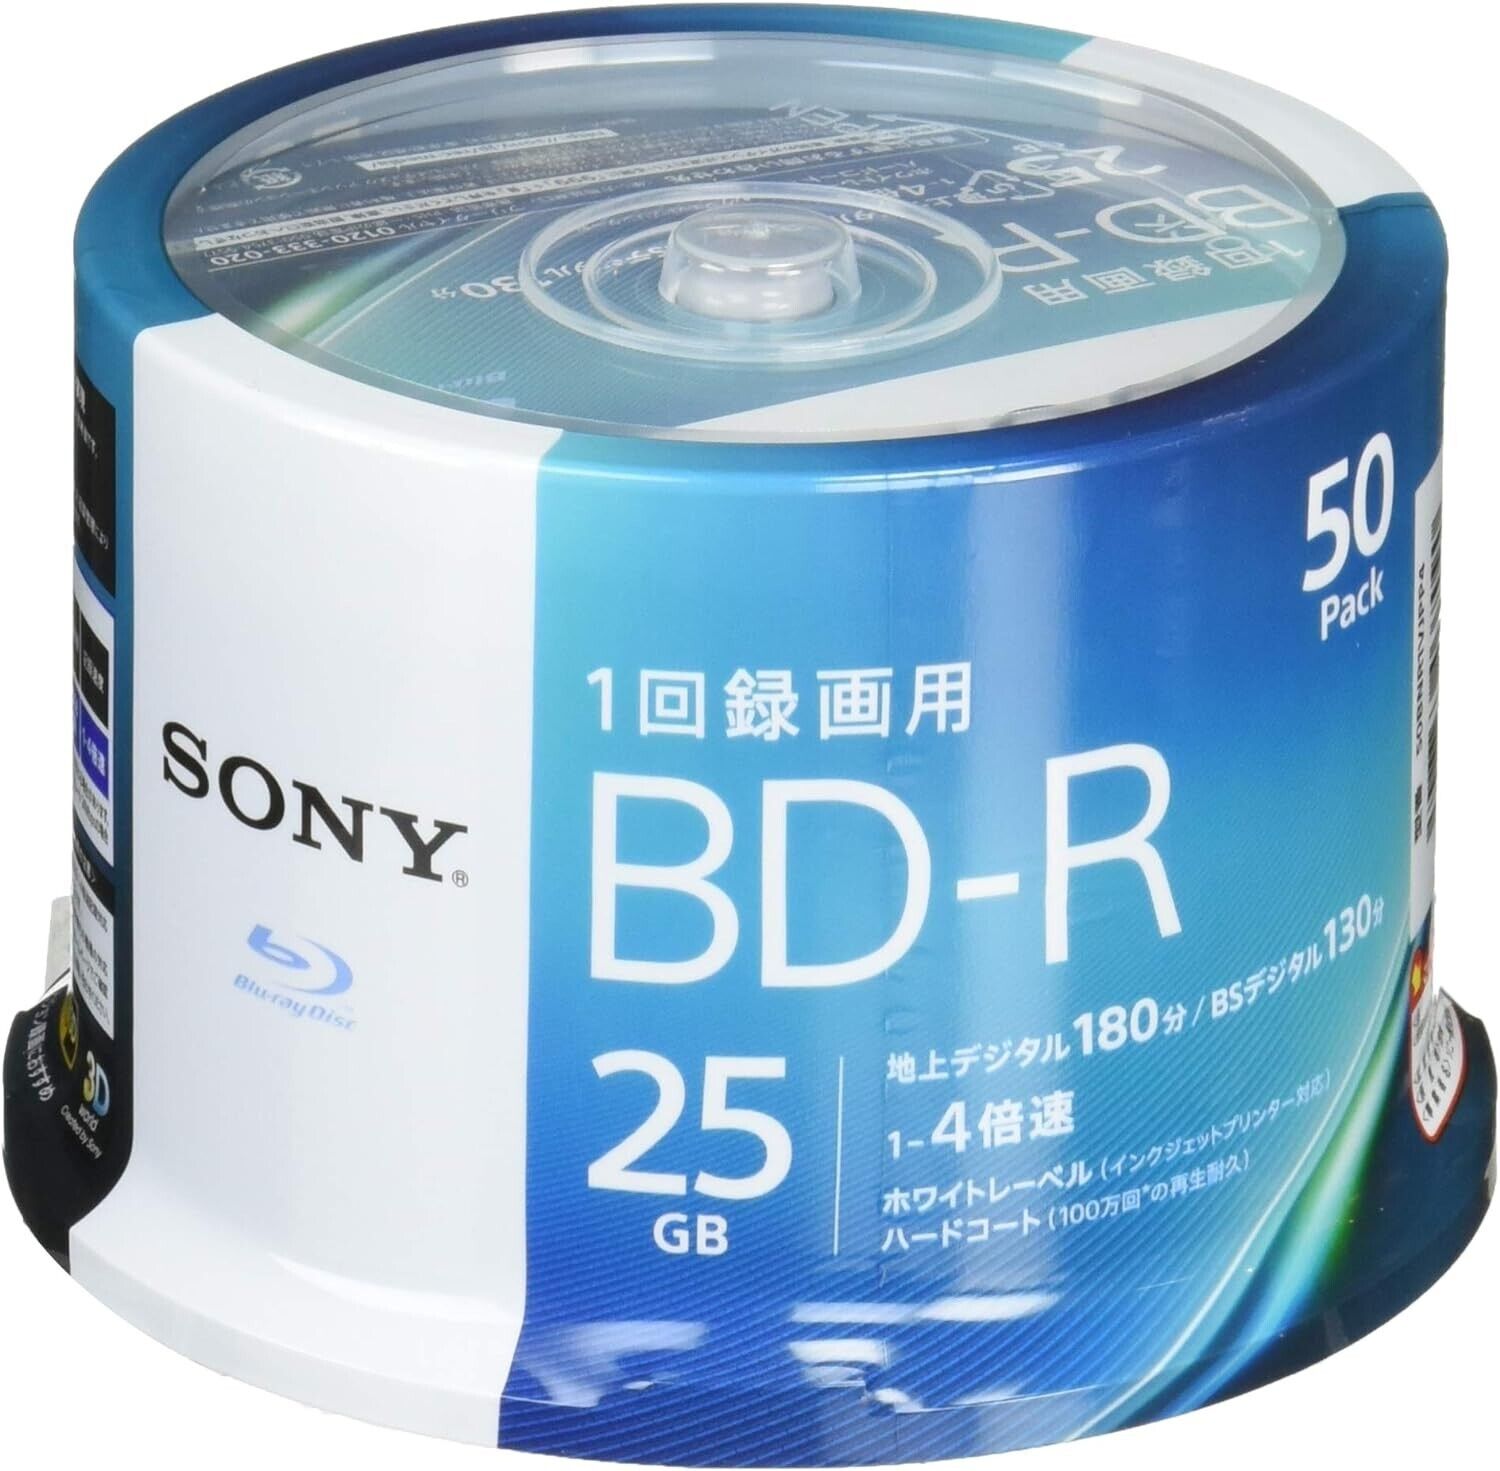 Sony Blu-ray Blank Disc BD-R 25GB 50 discs 4x 50BNR1VJPP4 One-time Rec inkjet